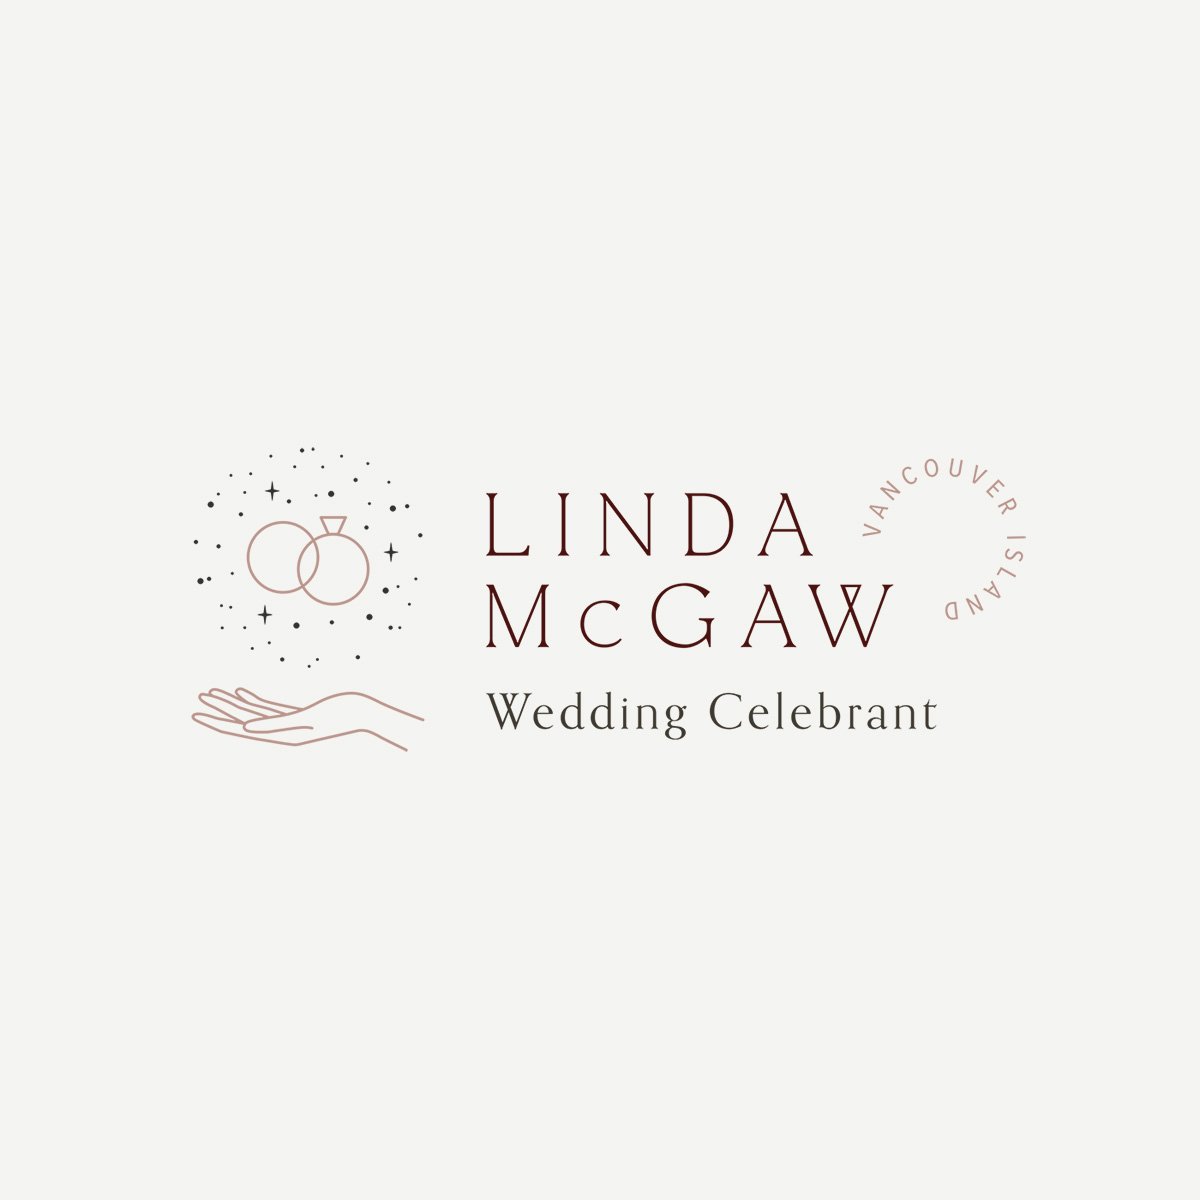 lindsay-mcghee-designs-linda-mcgaw-vancouver-island-wedding-celebrant-logo-horz-1200x1200